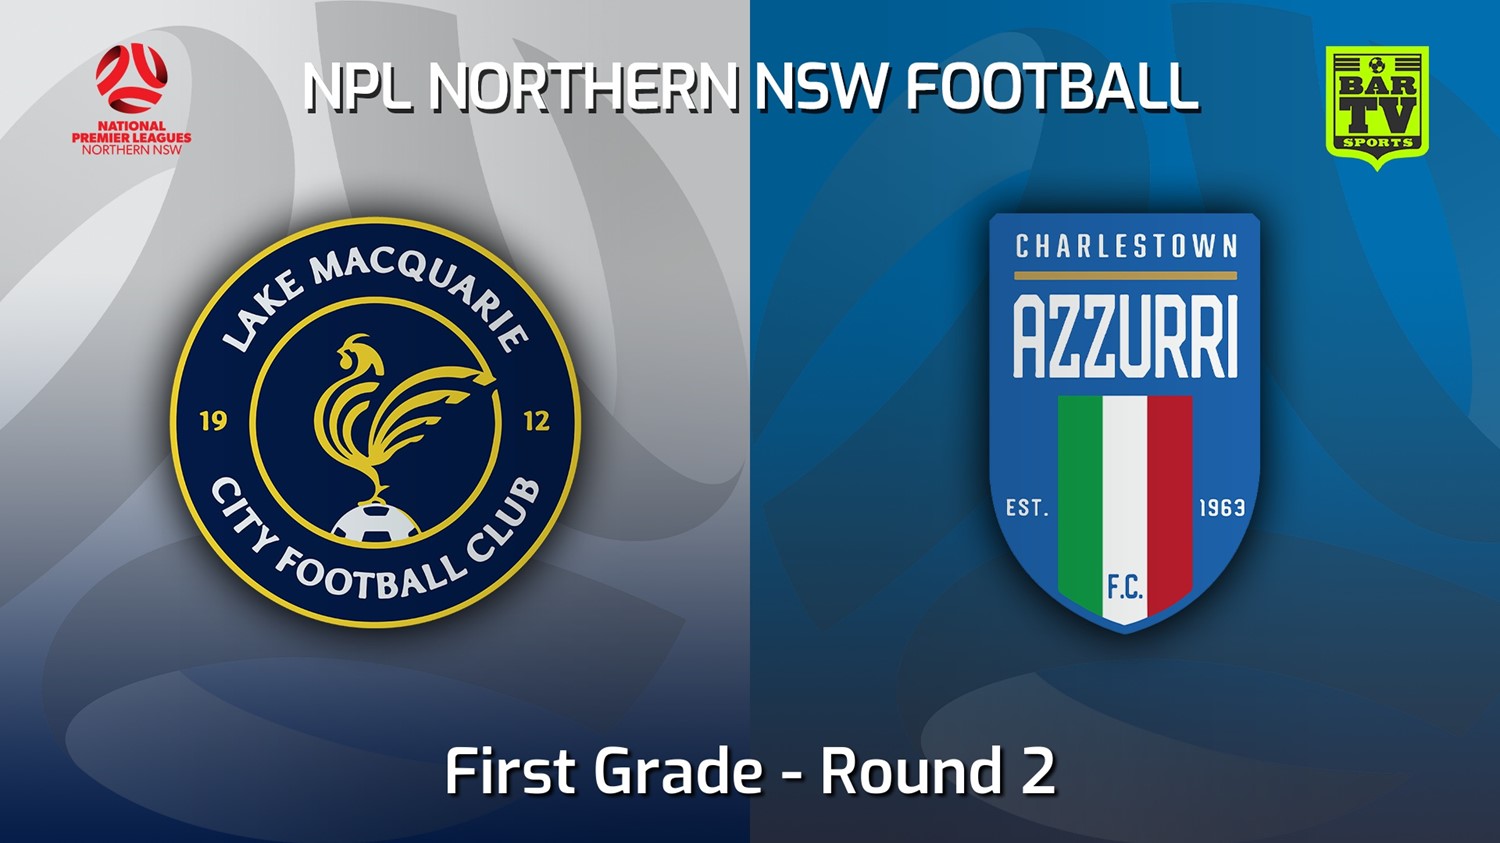 220313-NNSW NPL Round 2 - Lake Macquarie City FC v Charlestown Azzurri FC Minigame Slate Image